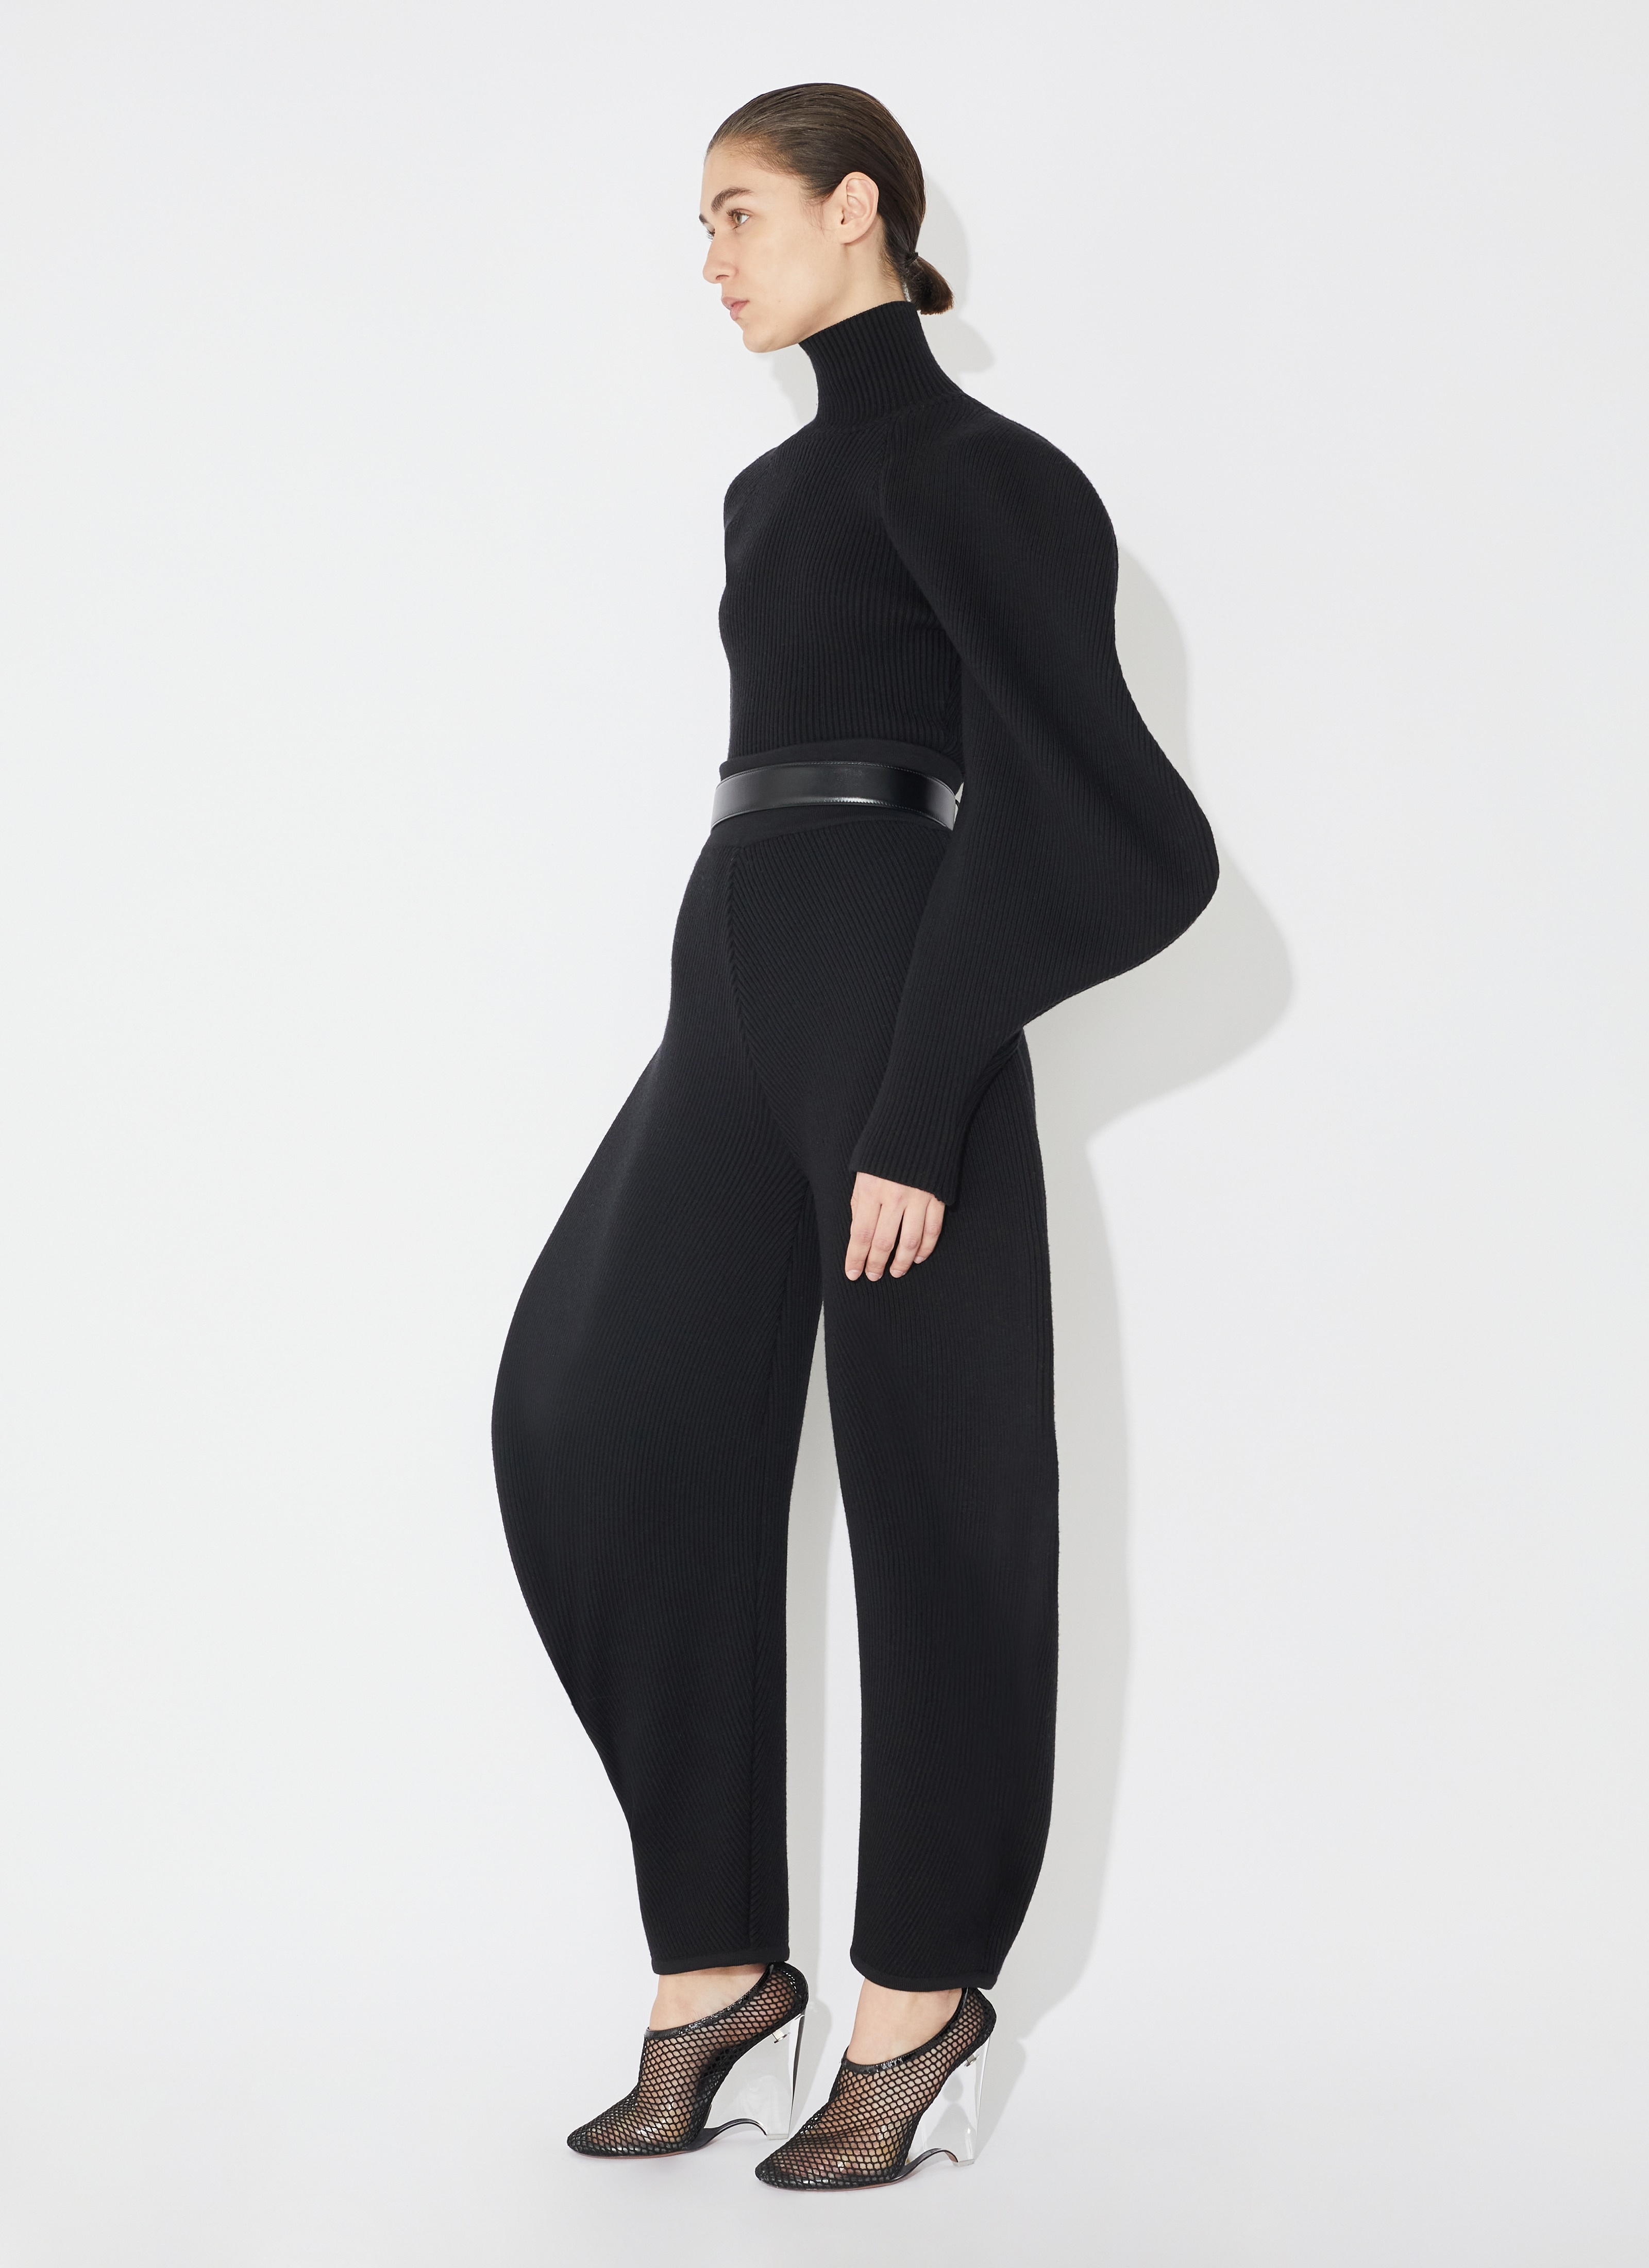 ALAÏA Women's Black Asymetric Sculptural Rib Knit Sweater